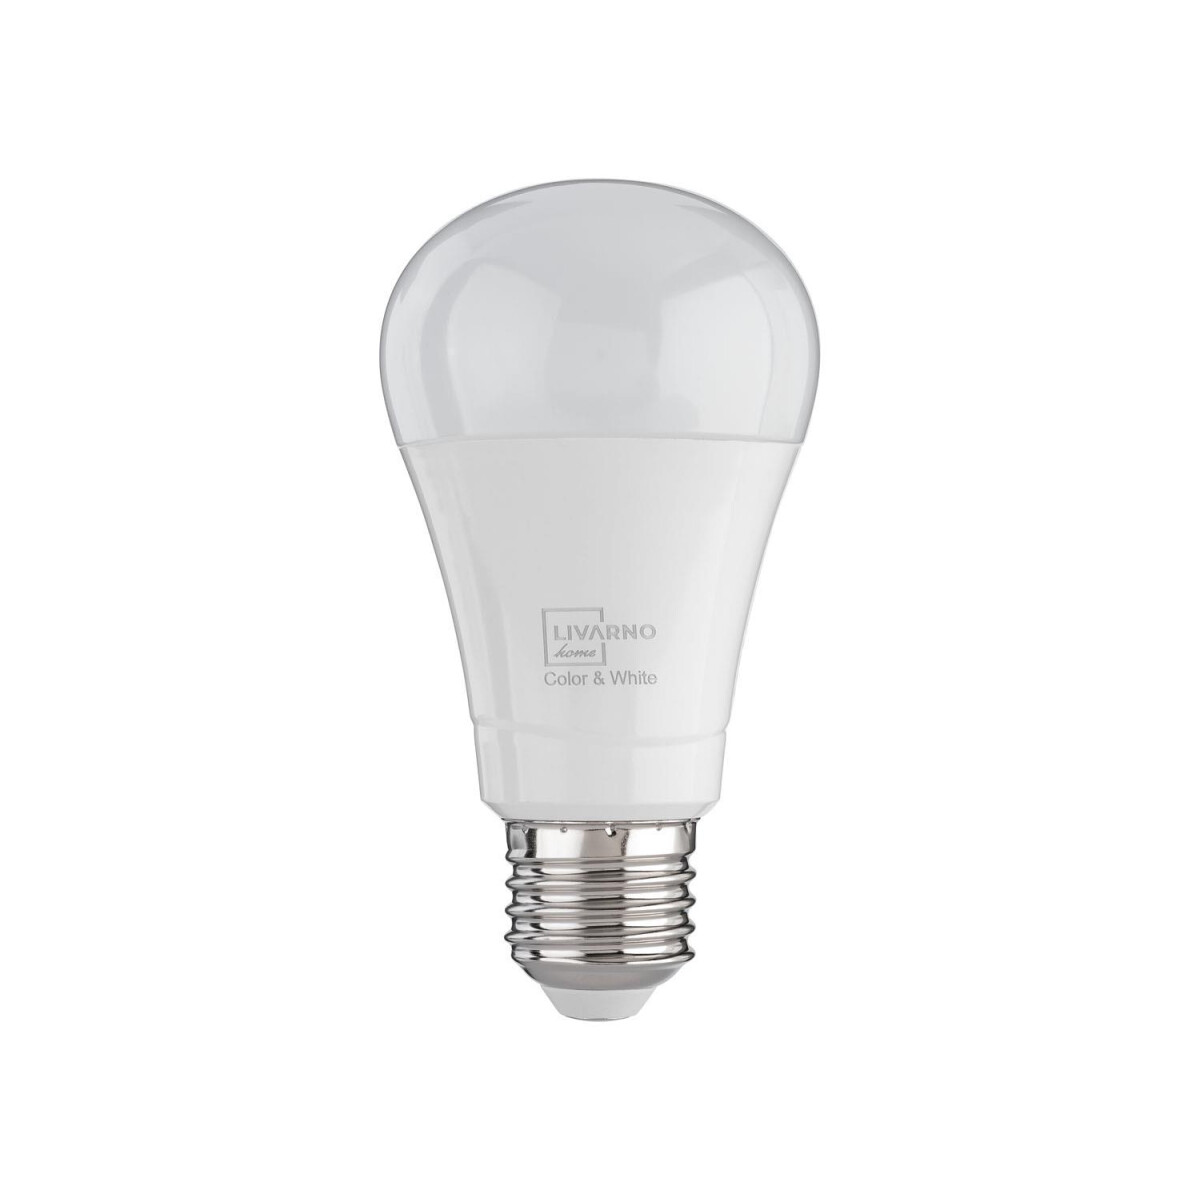 Zigbee B-Ware Smart Kugel home LED-Lampe, LIVARNO 3.0 - Home 10,99 € neuwertig,